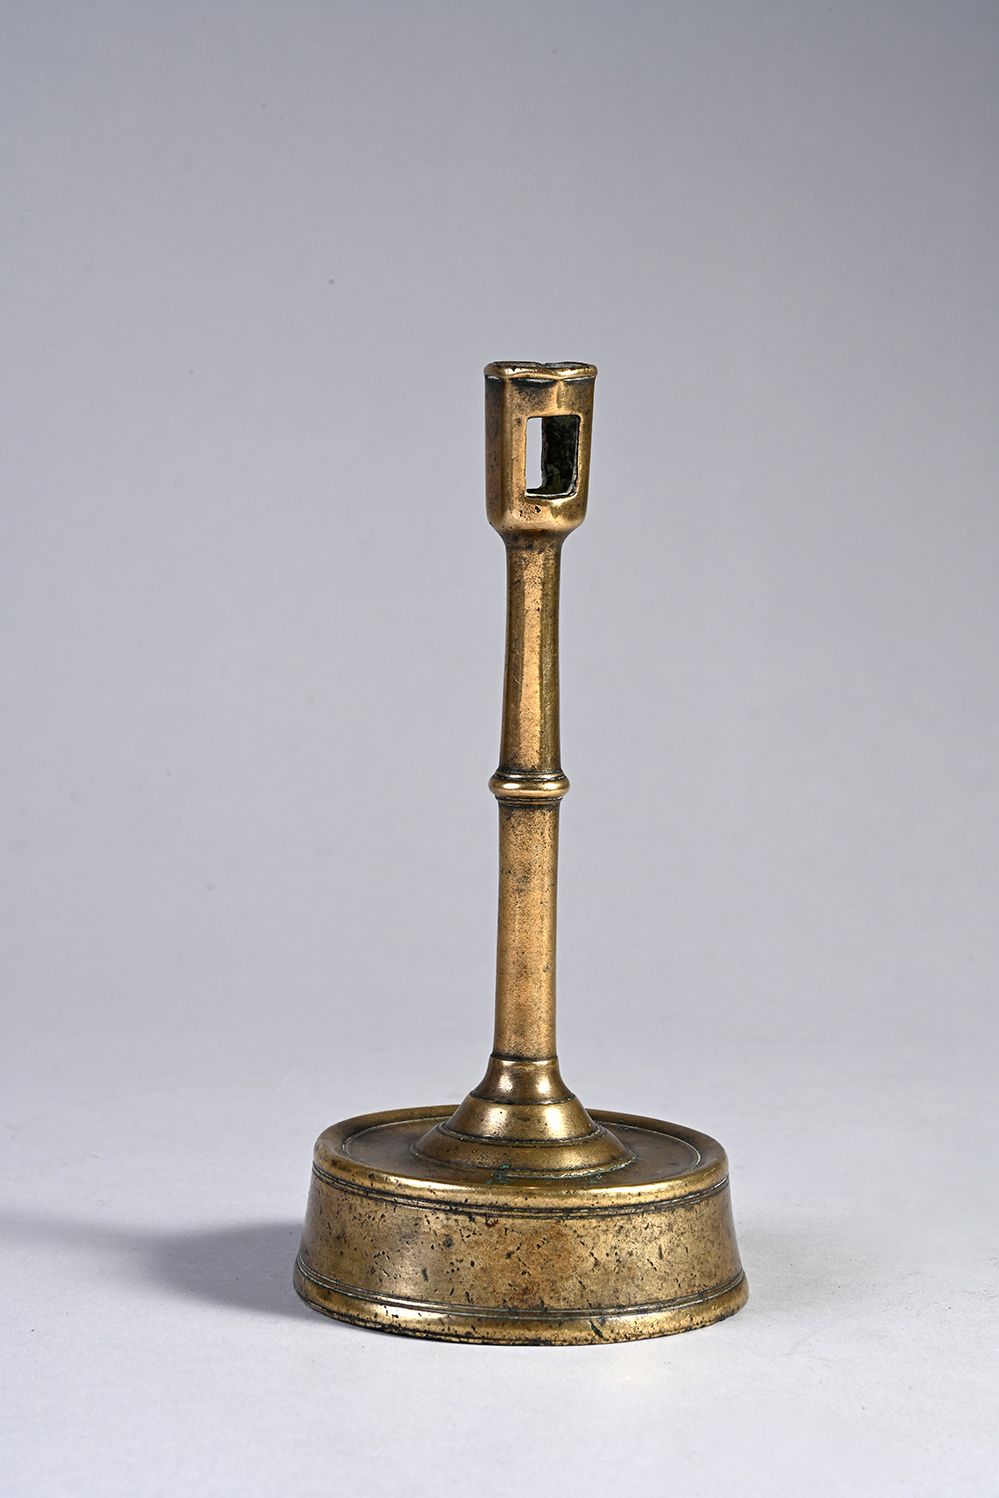 Null 小铜烛台，高圆形底座，轴上有一个环，高双窗插座。
佛兰德斯，15世纪
H.16.5厘米
(小变形)